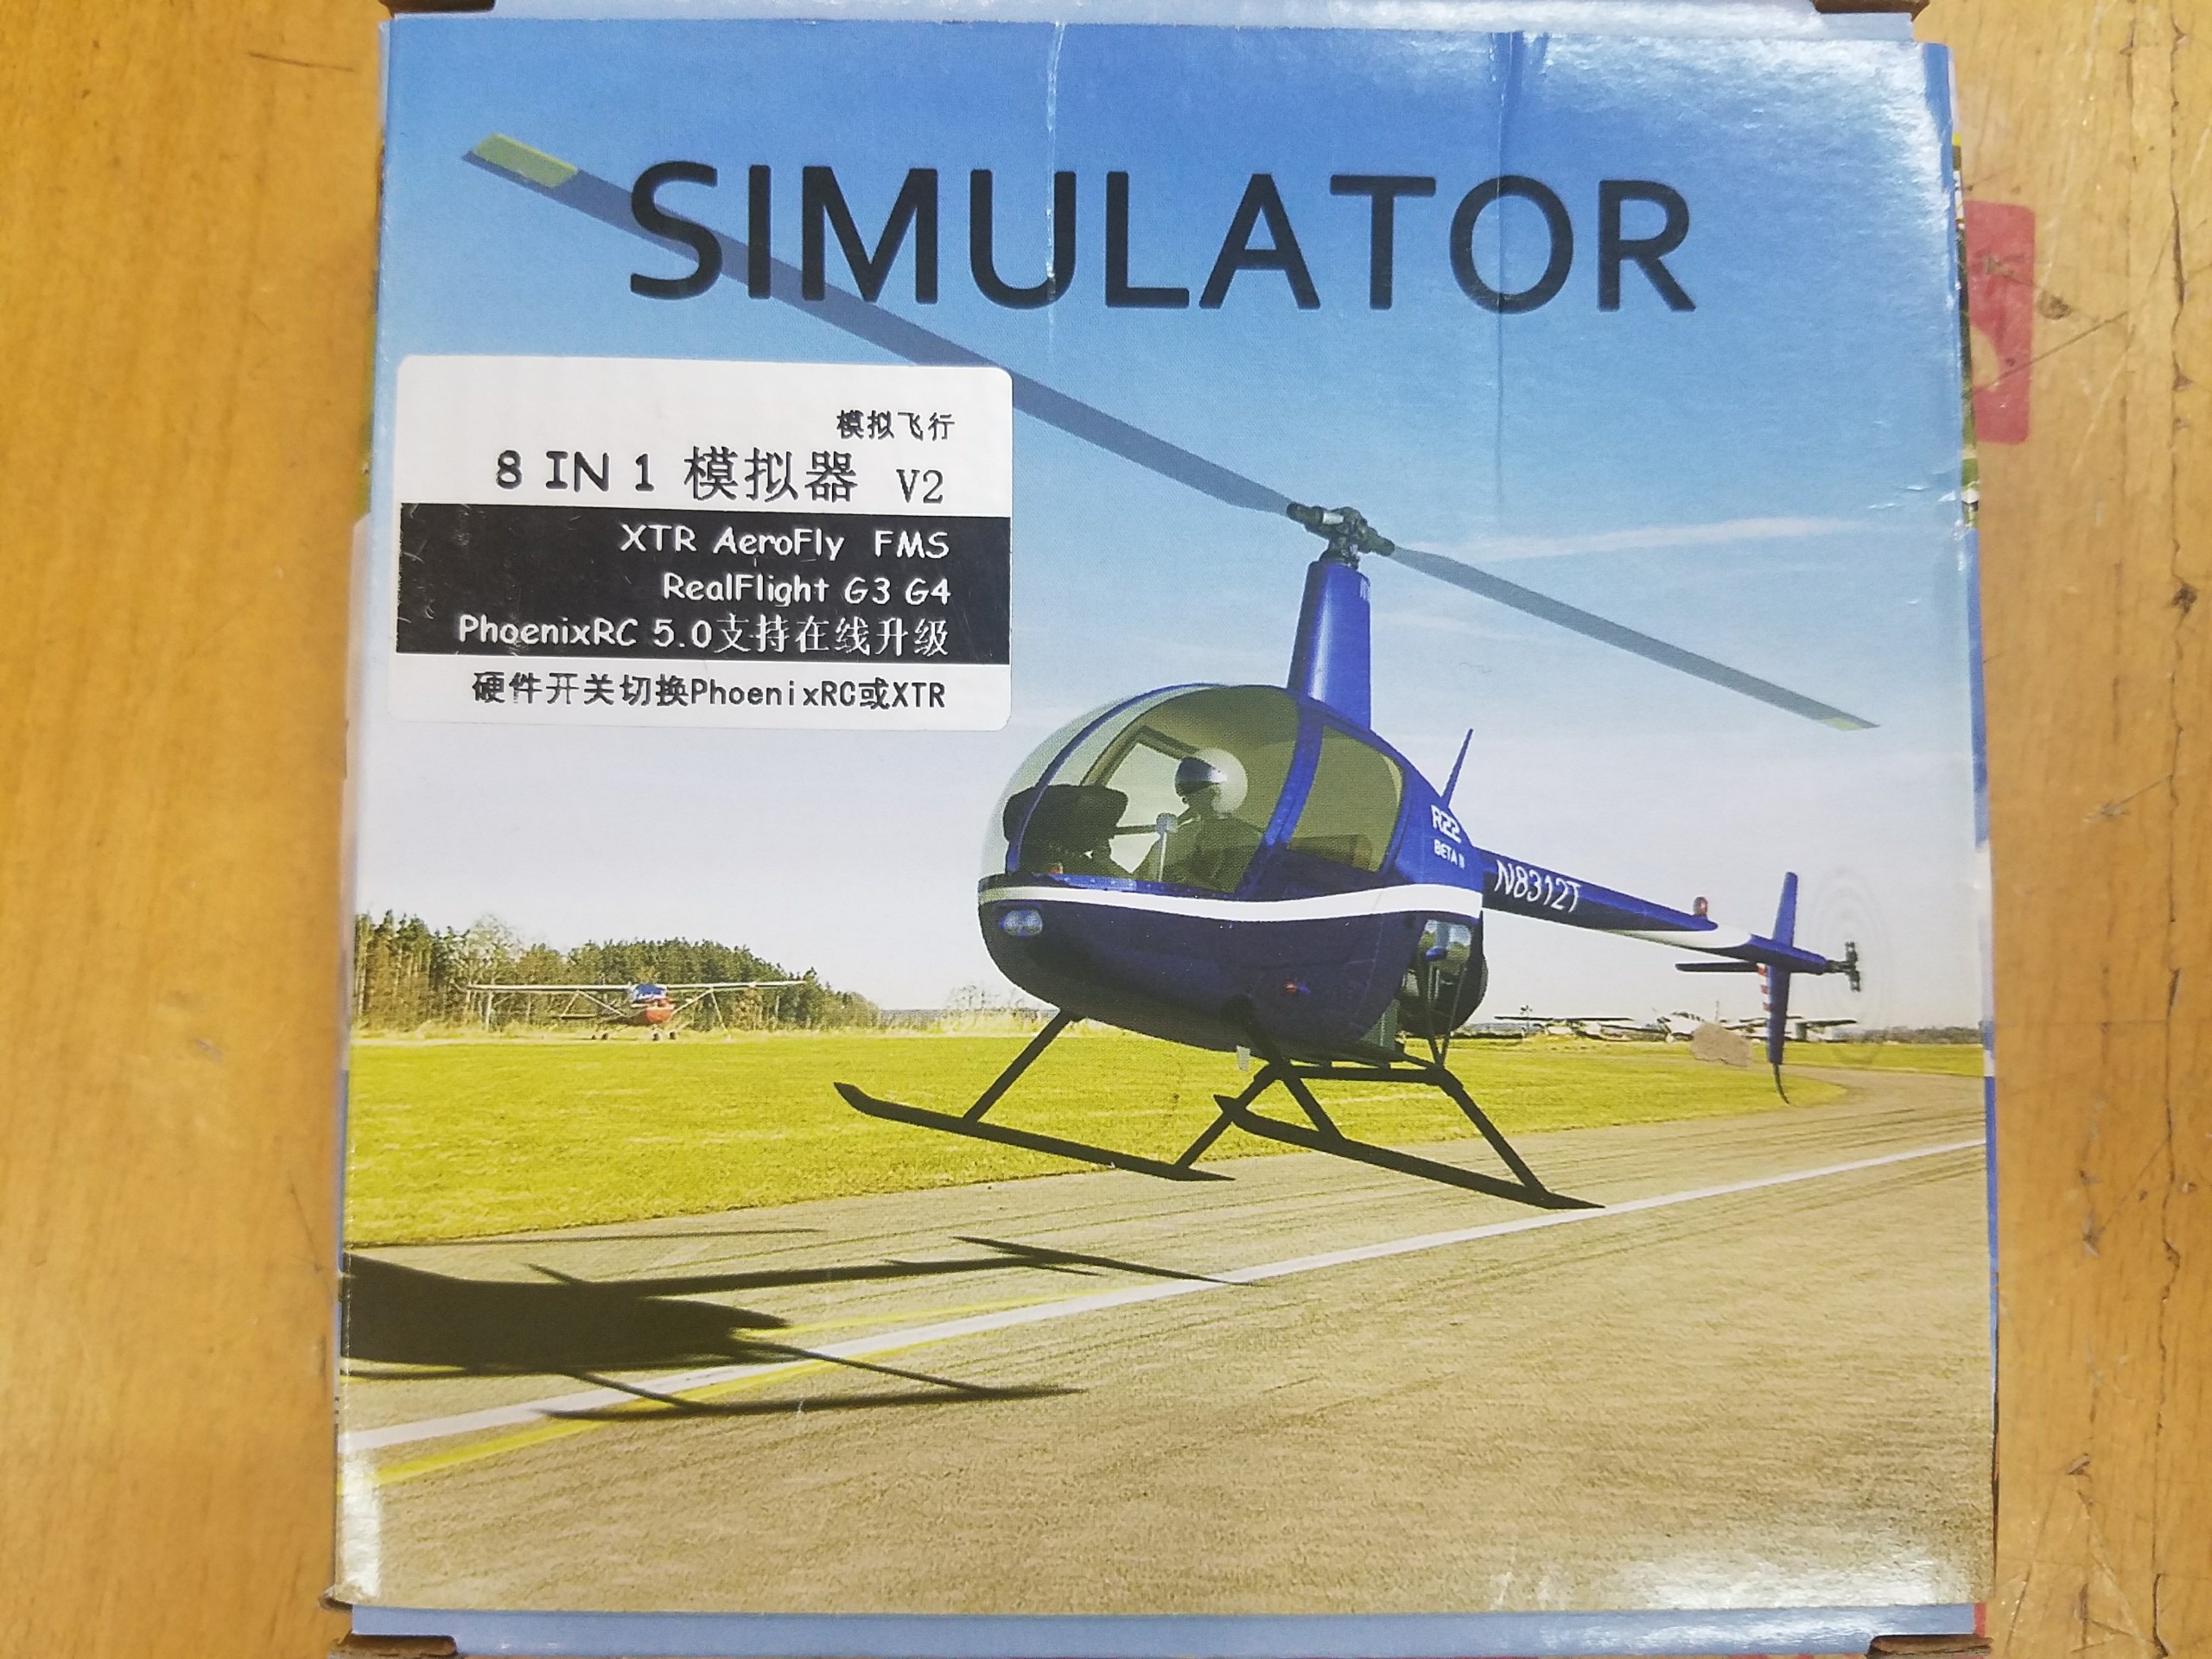 phoenix rc flight simulator 5.0 update